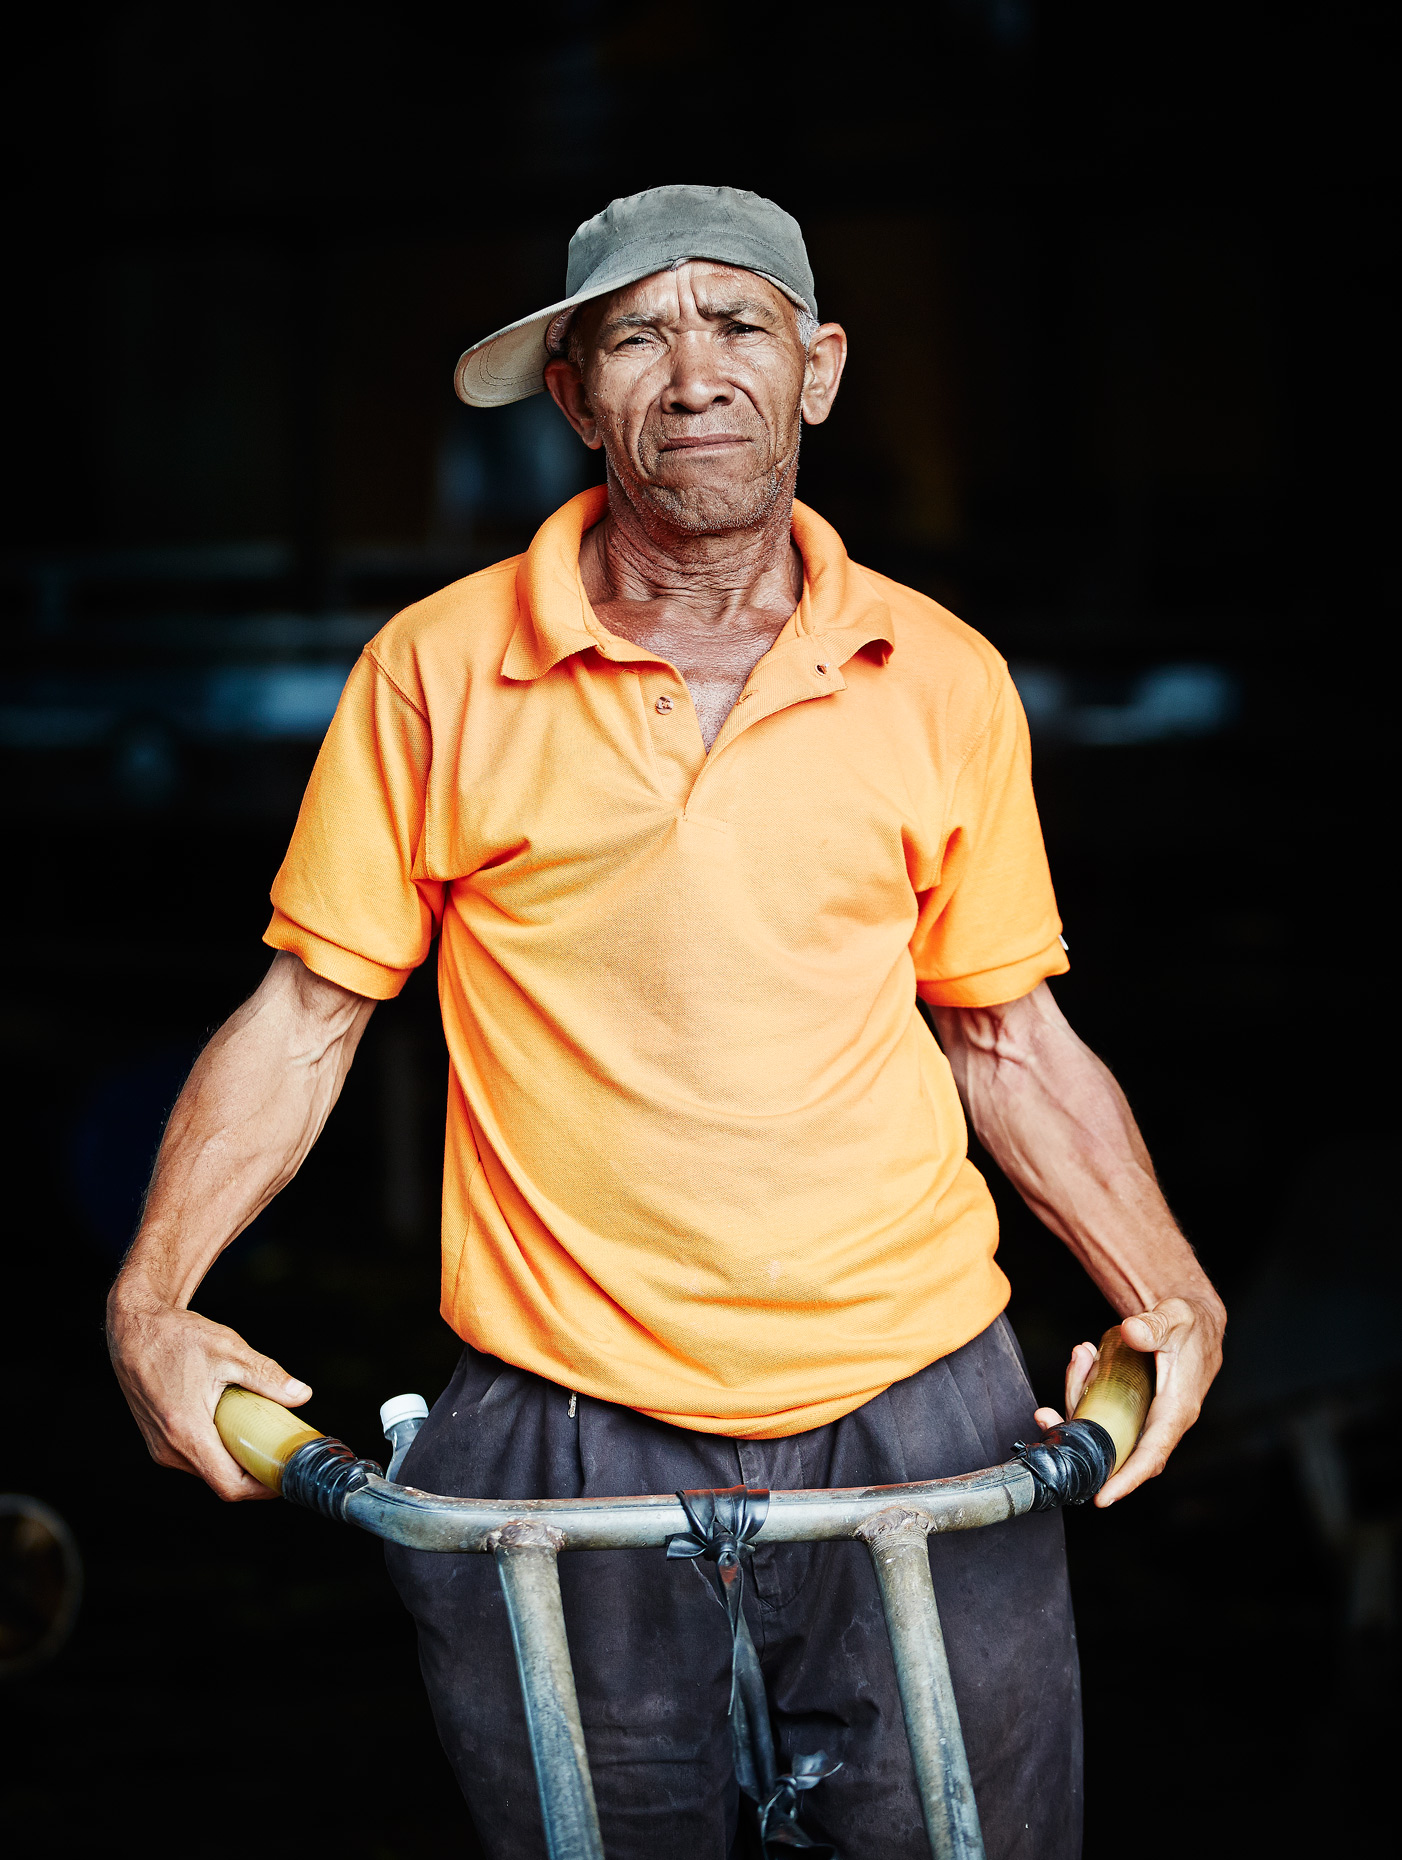 Travel Photography Dominican Republic Derek Israelsen Man on Bike